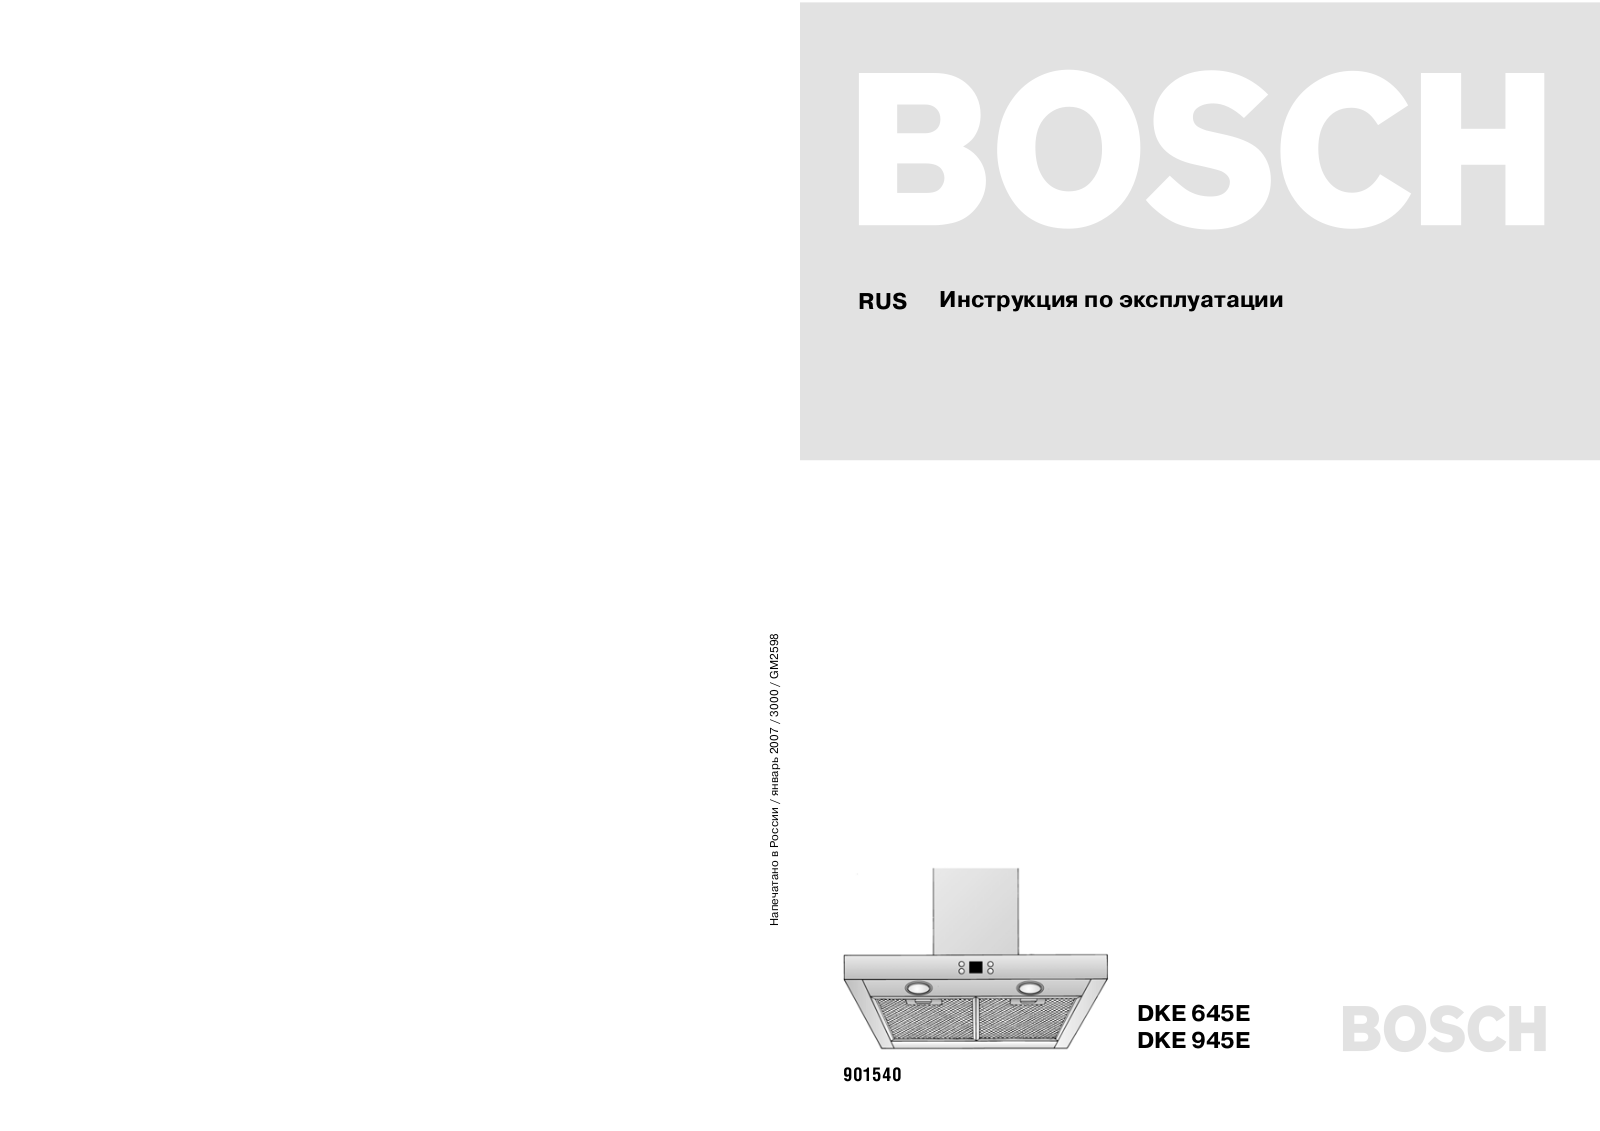 Bosch DKE 945 M User Manual